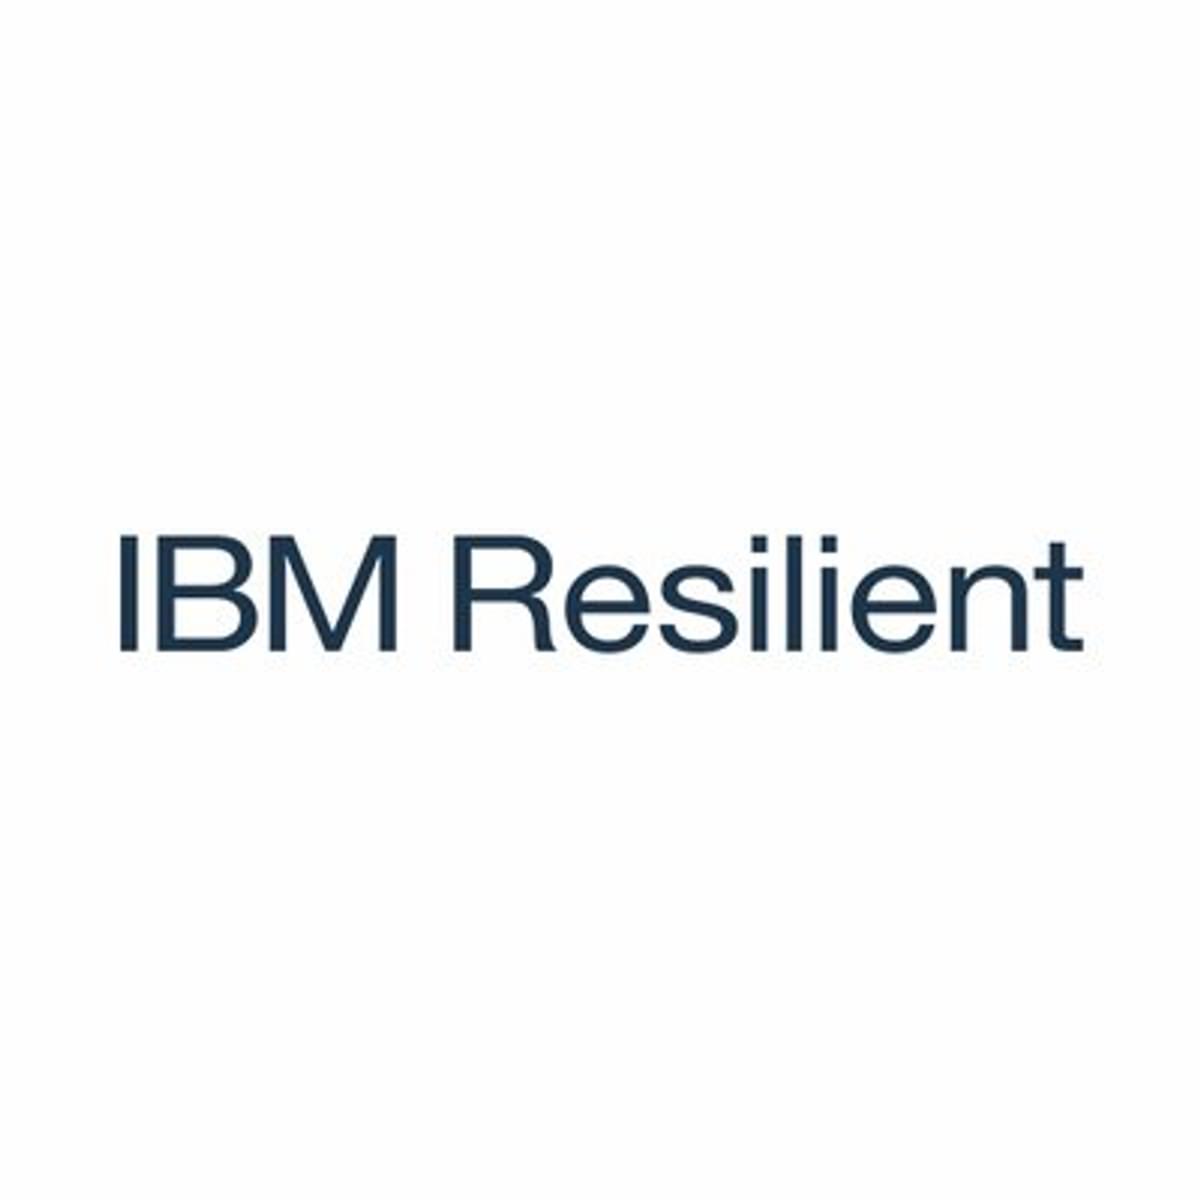 IBM Resilient lanceert intelligente orkestratie image